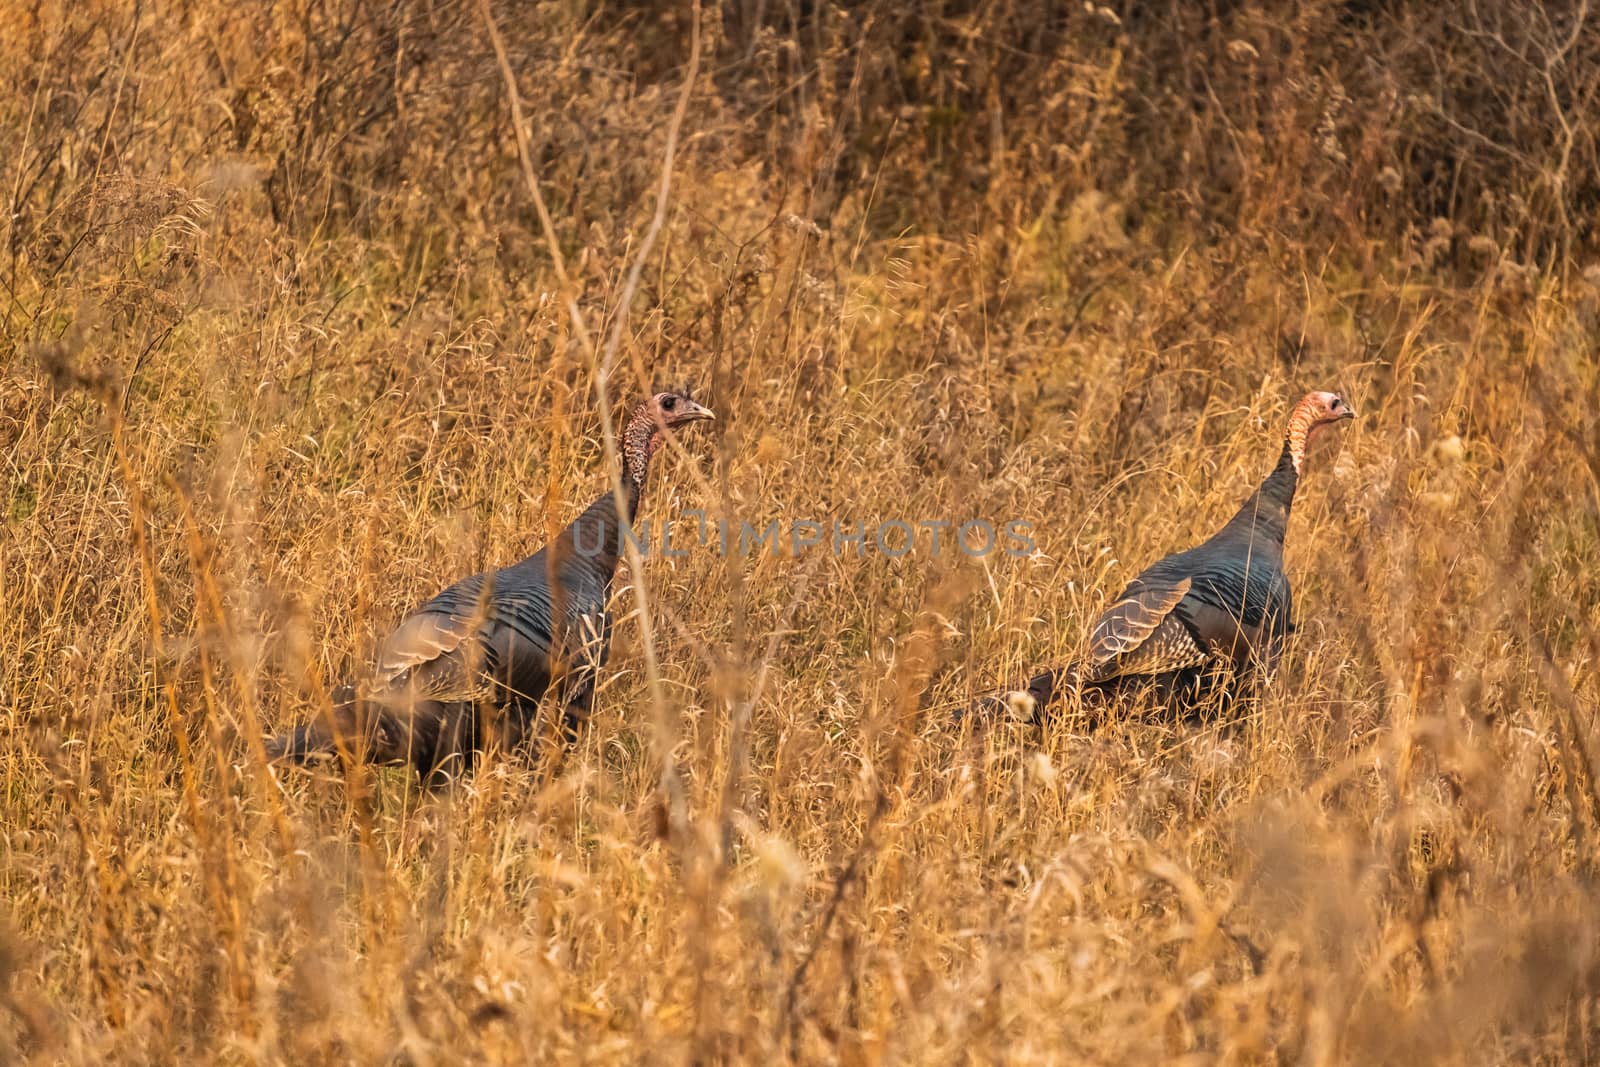 Two wild turkeys walk through tall, dry grass in golden evening light in the fall season.